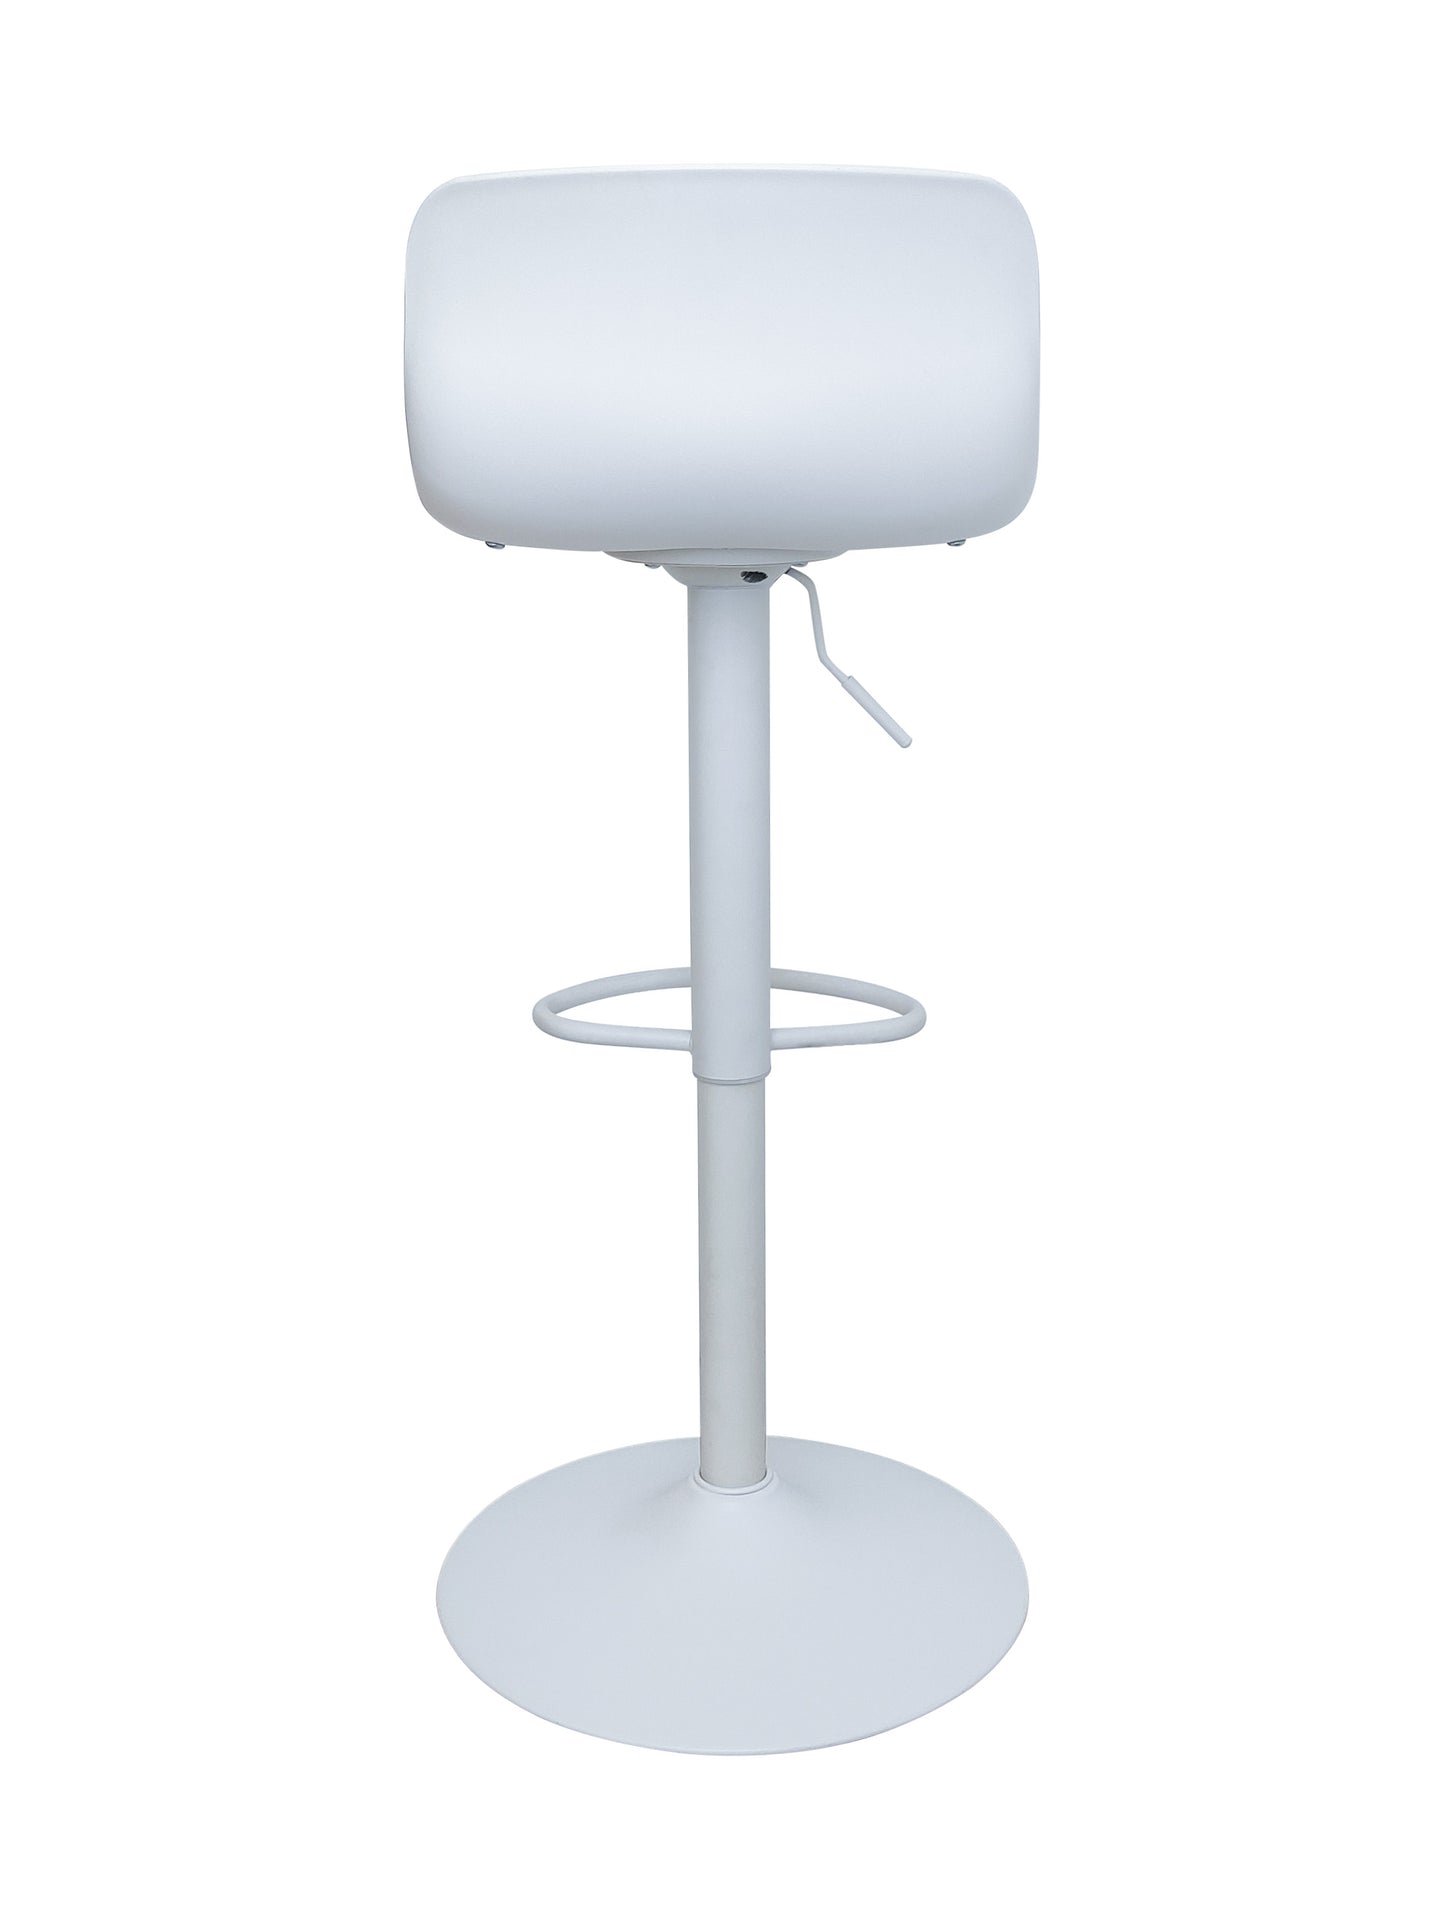 CHOTTO - Eri Adjustable Swivel Bar Stools with Padded Seat - White x 2